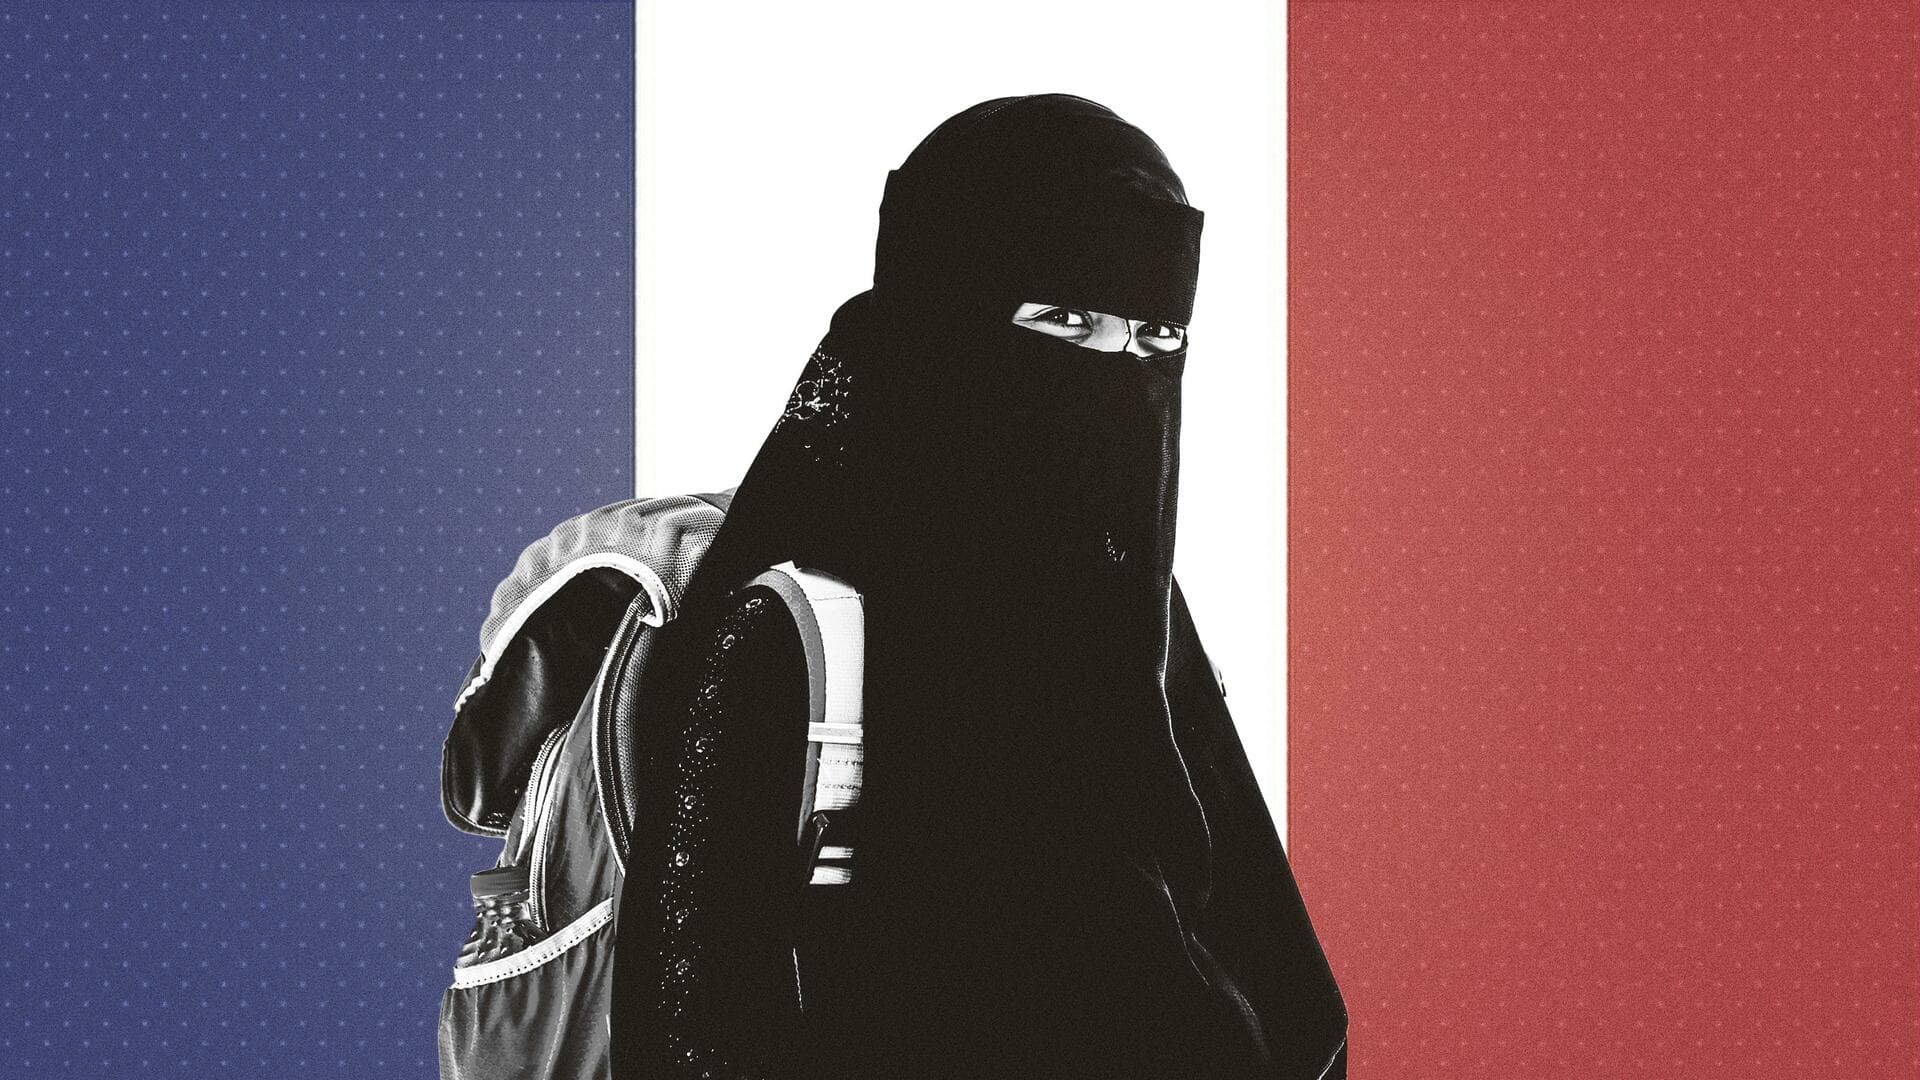 France bans abaya: పాఠశాలల్లో ఇస్లామిక్ అబాయా దుస్తులపై ఫ్రాన్స్ నిషేధం